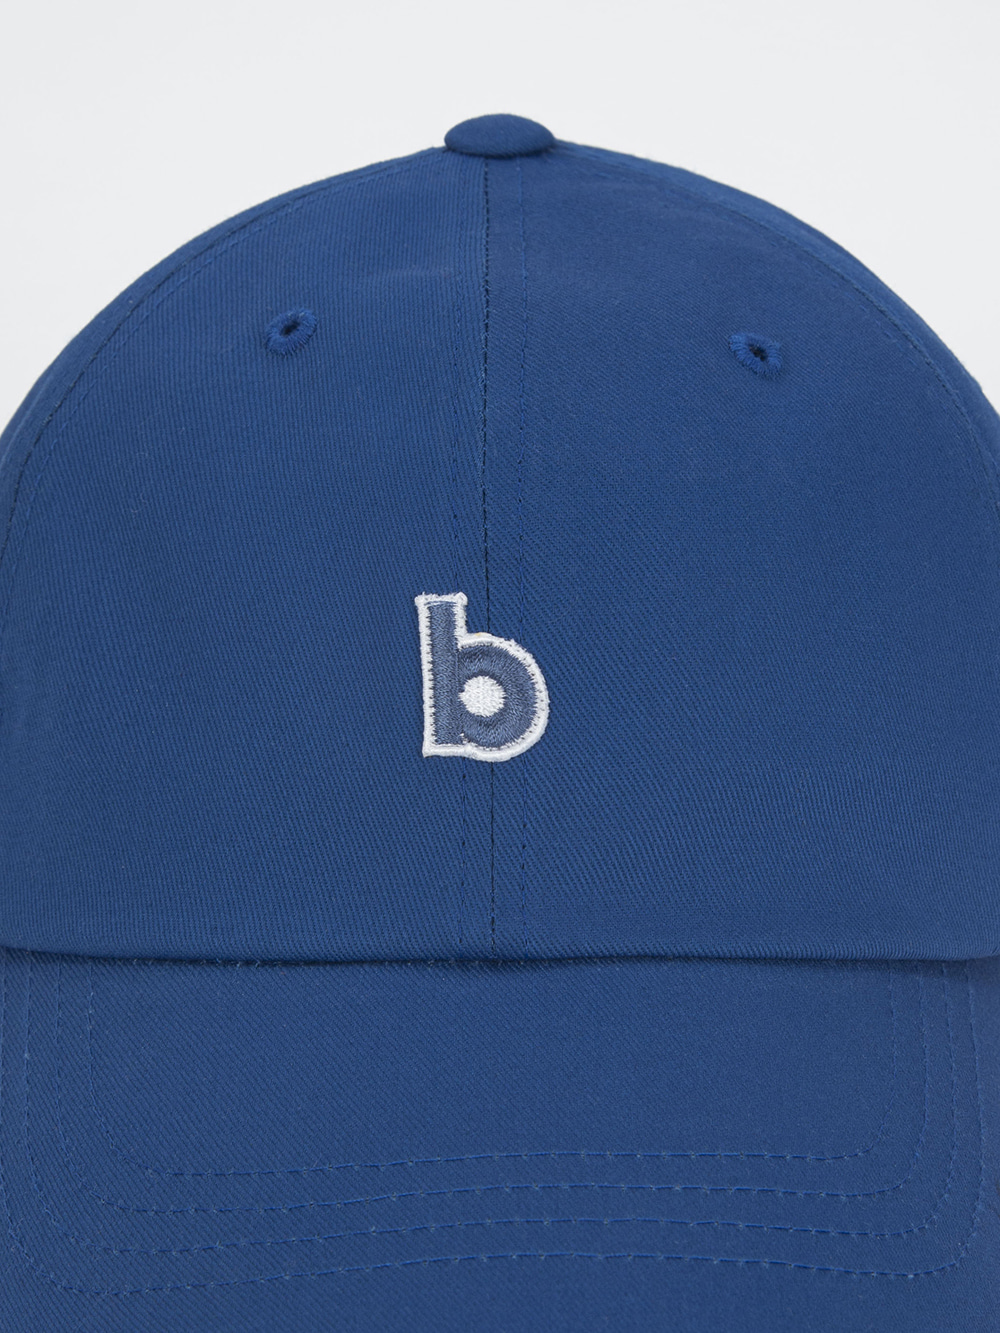 Billboard Global B logo Ball Cap_Blue